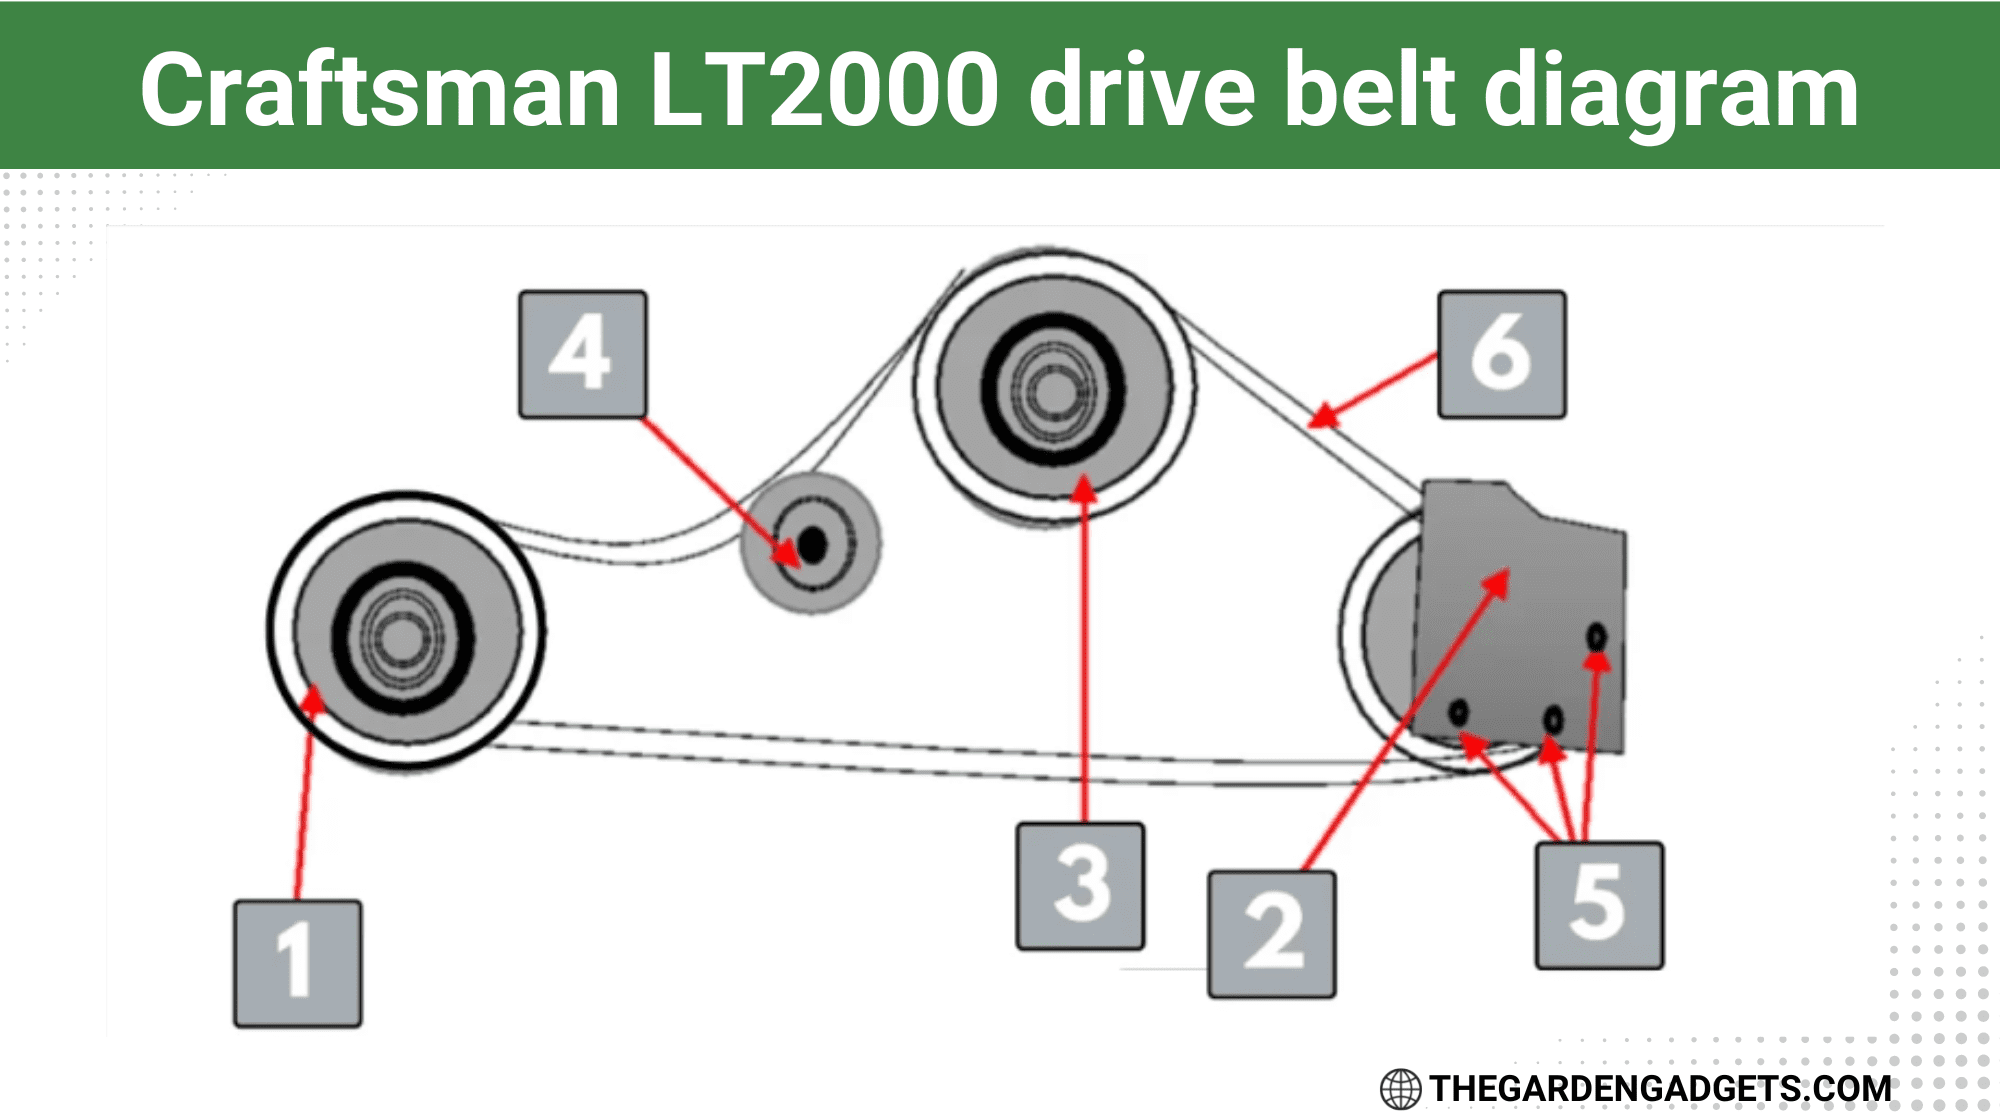 Drive Belt Diagram For Craftsman Lt2000 - www.inf-inet.com